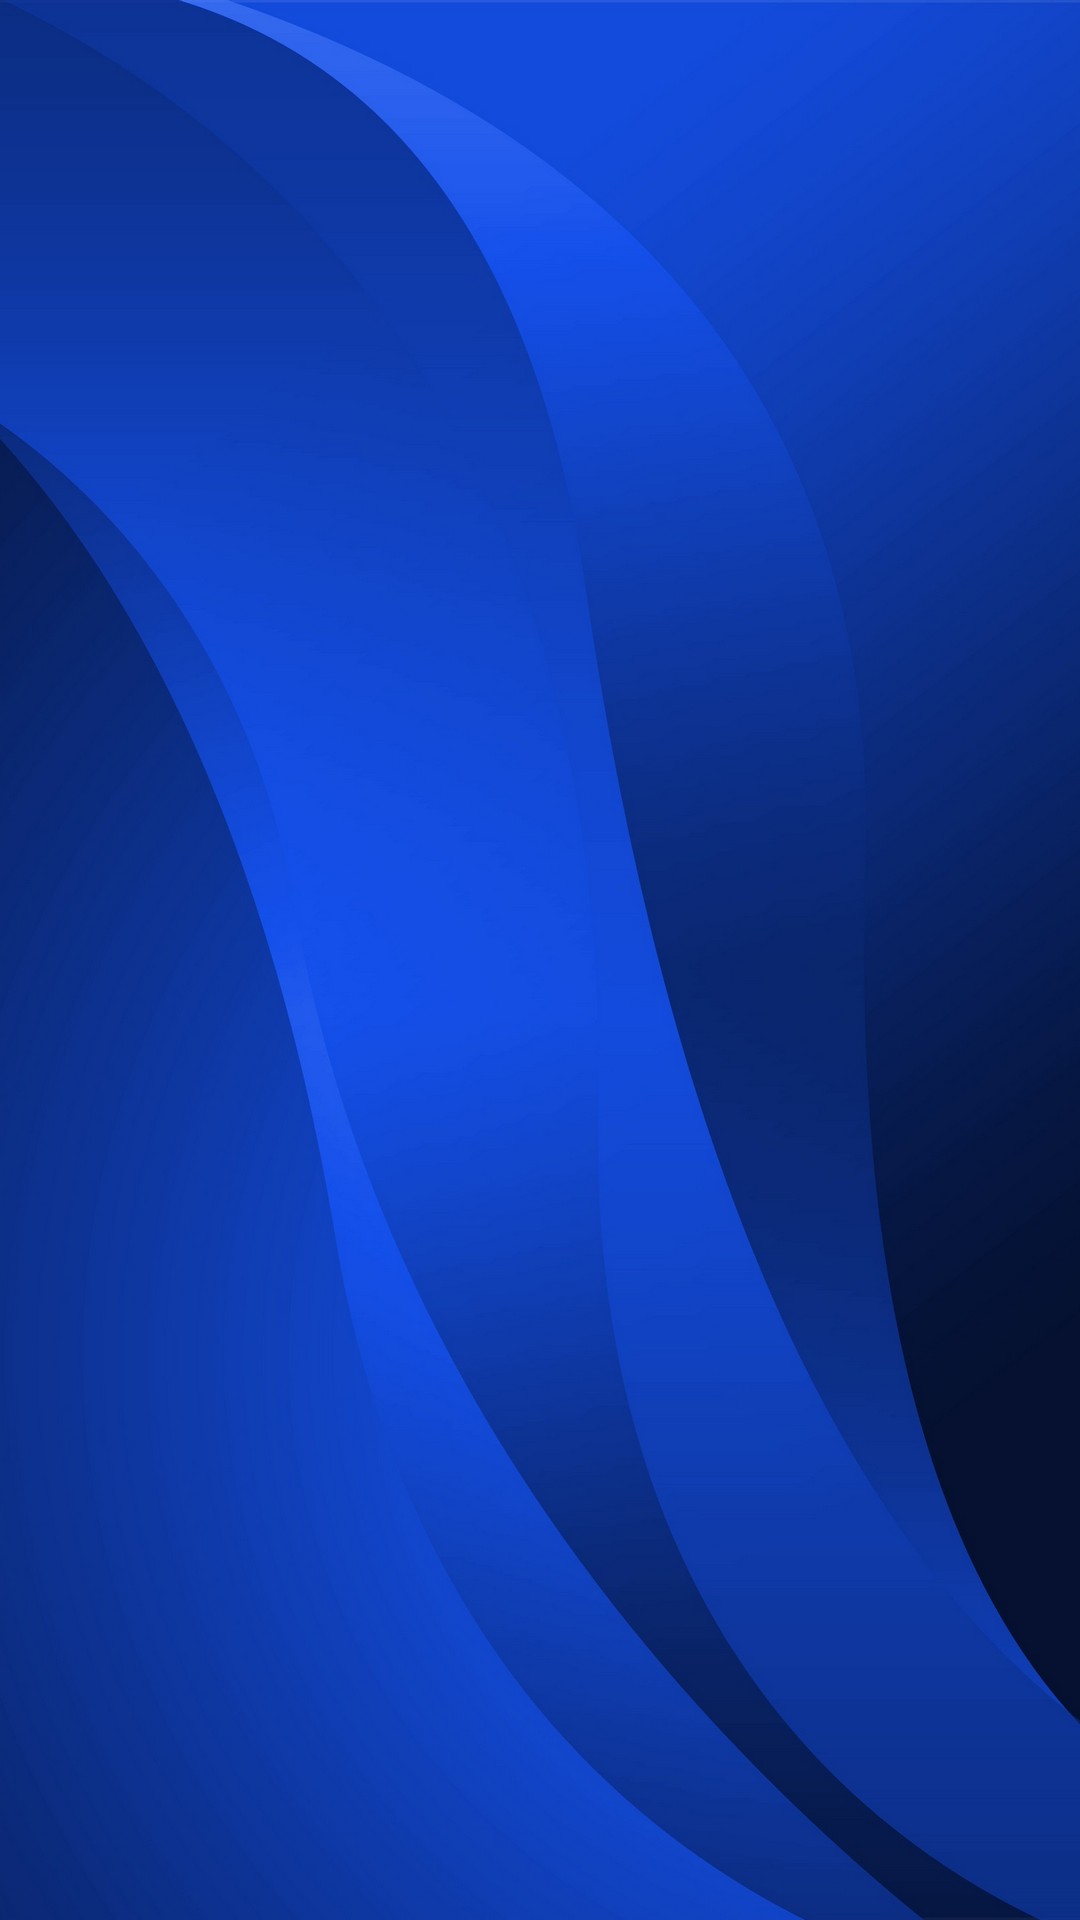 Dark Blue iPhone Wallpaper Hd resolution 1080x1920